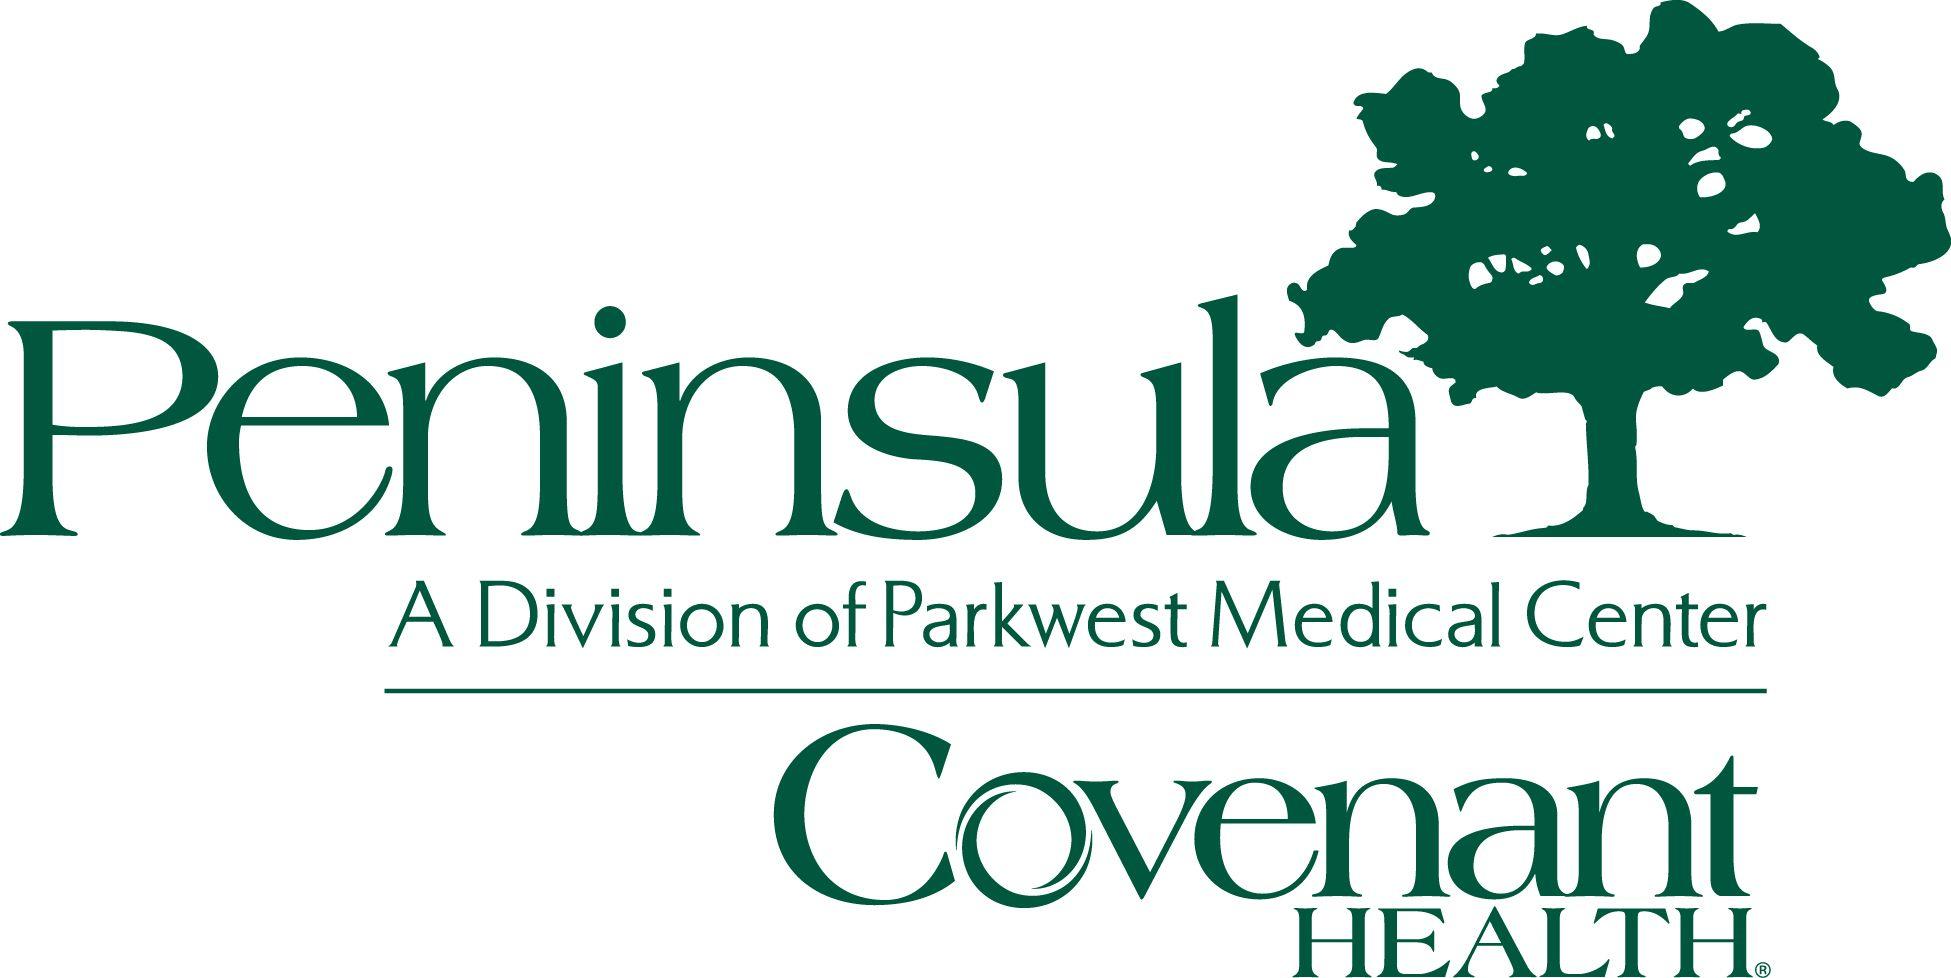 Peninsula Logo - Peninsula logo. Covenant Health Employment Services